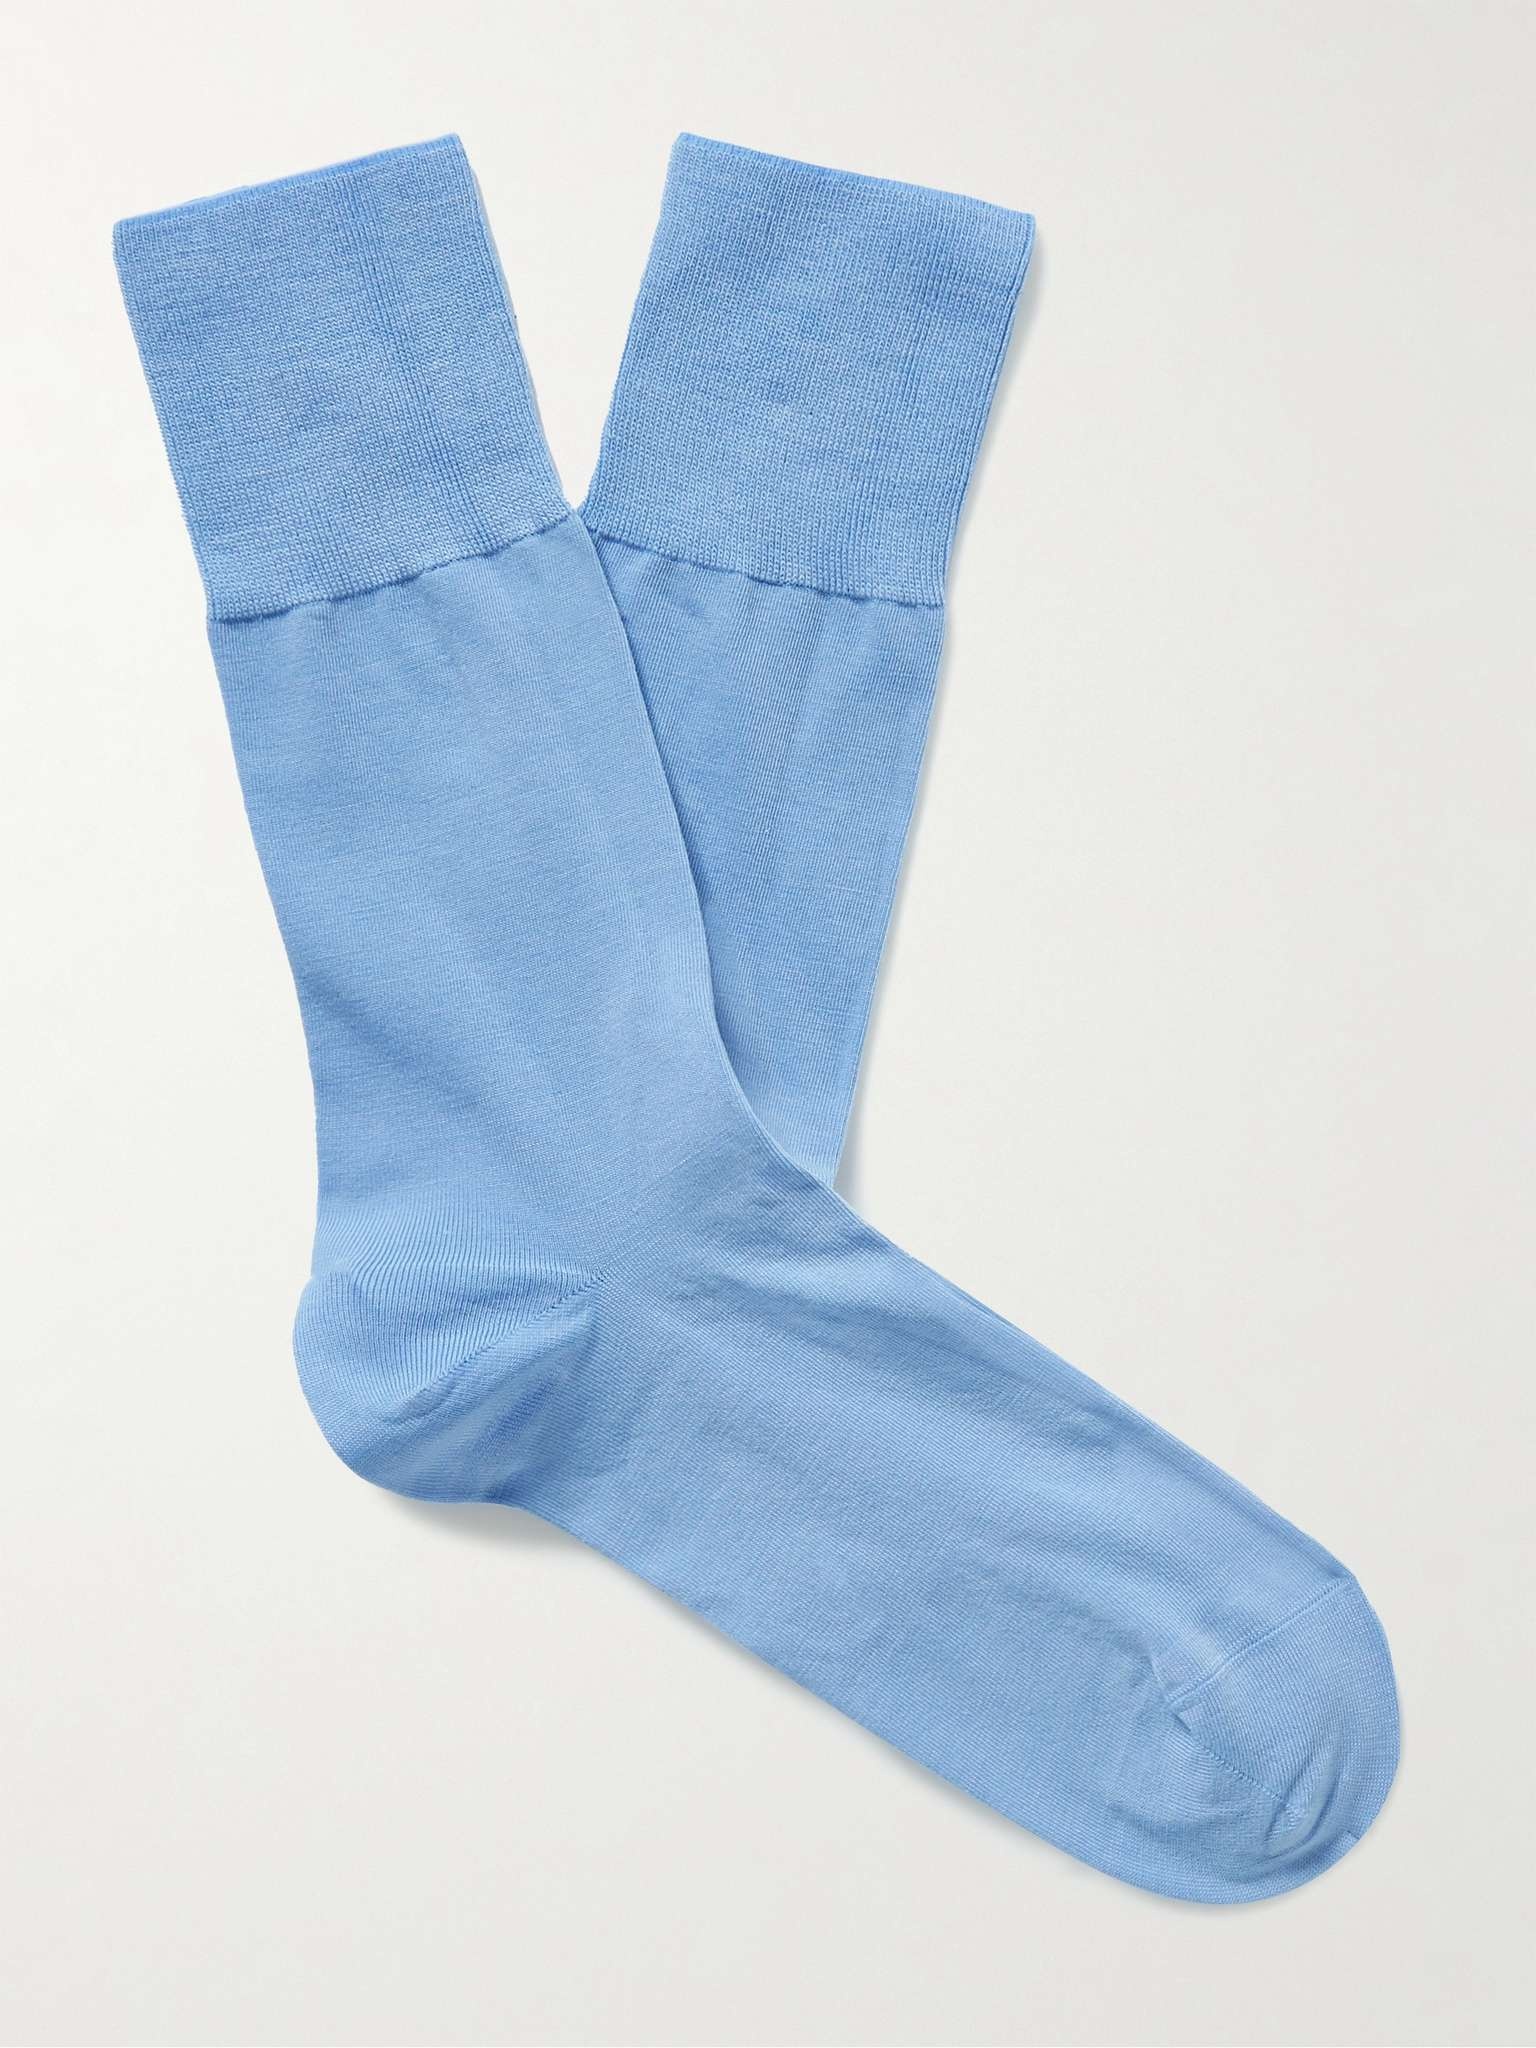 ClimaWool Socks - 1